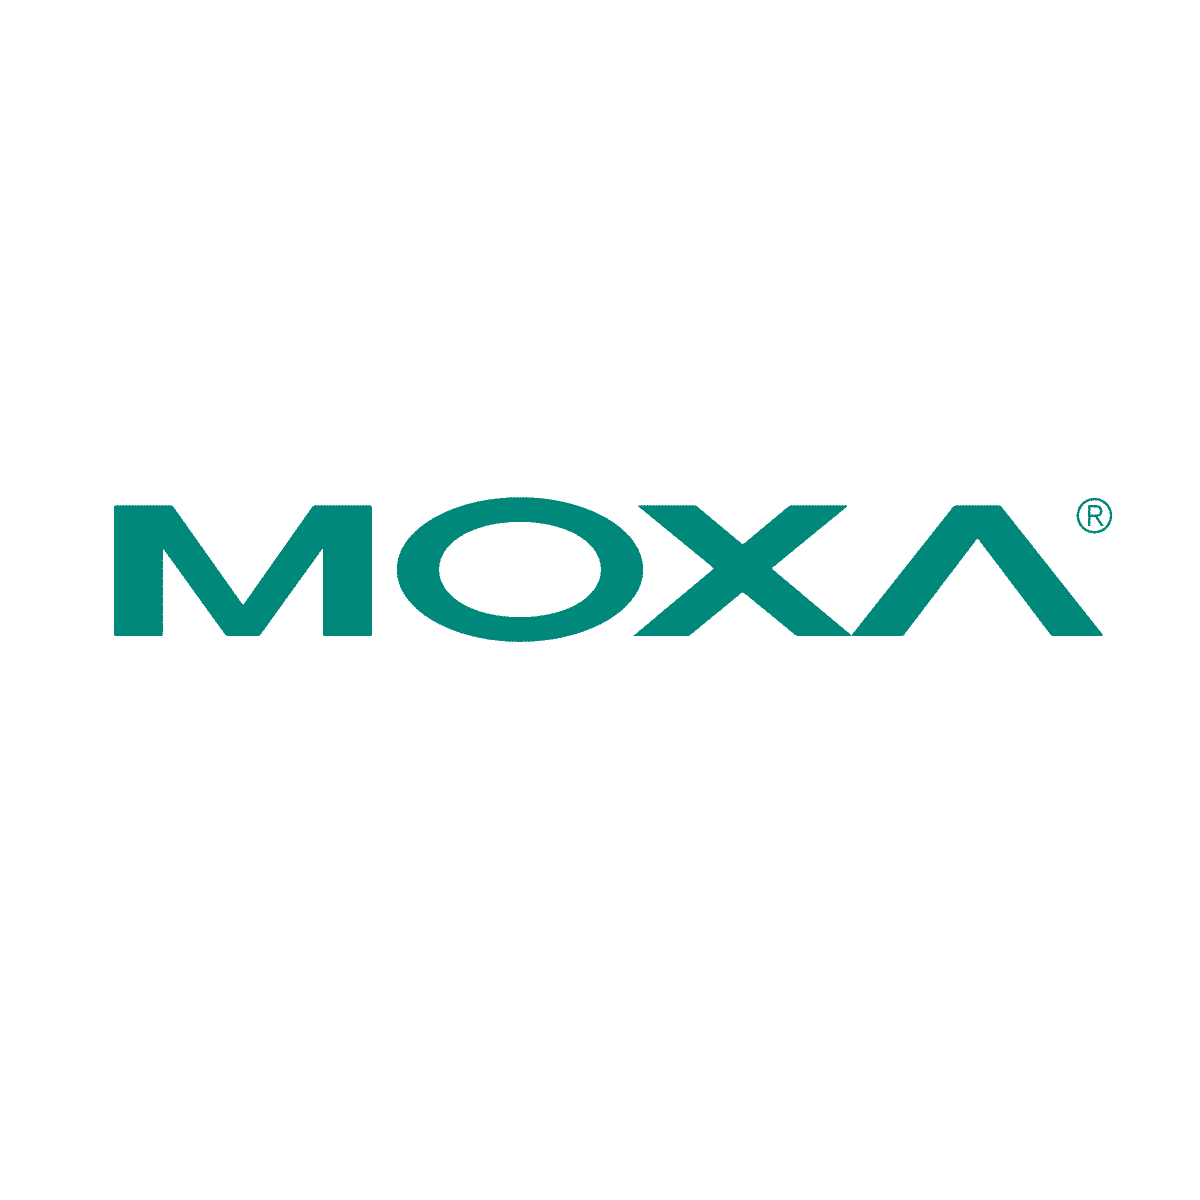 moxa-logo-open-graph.png